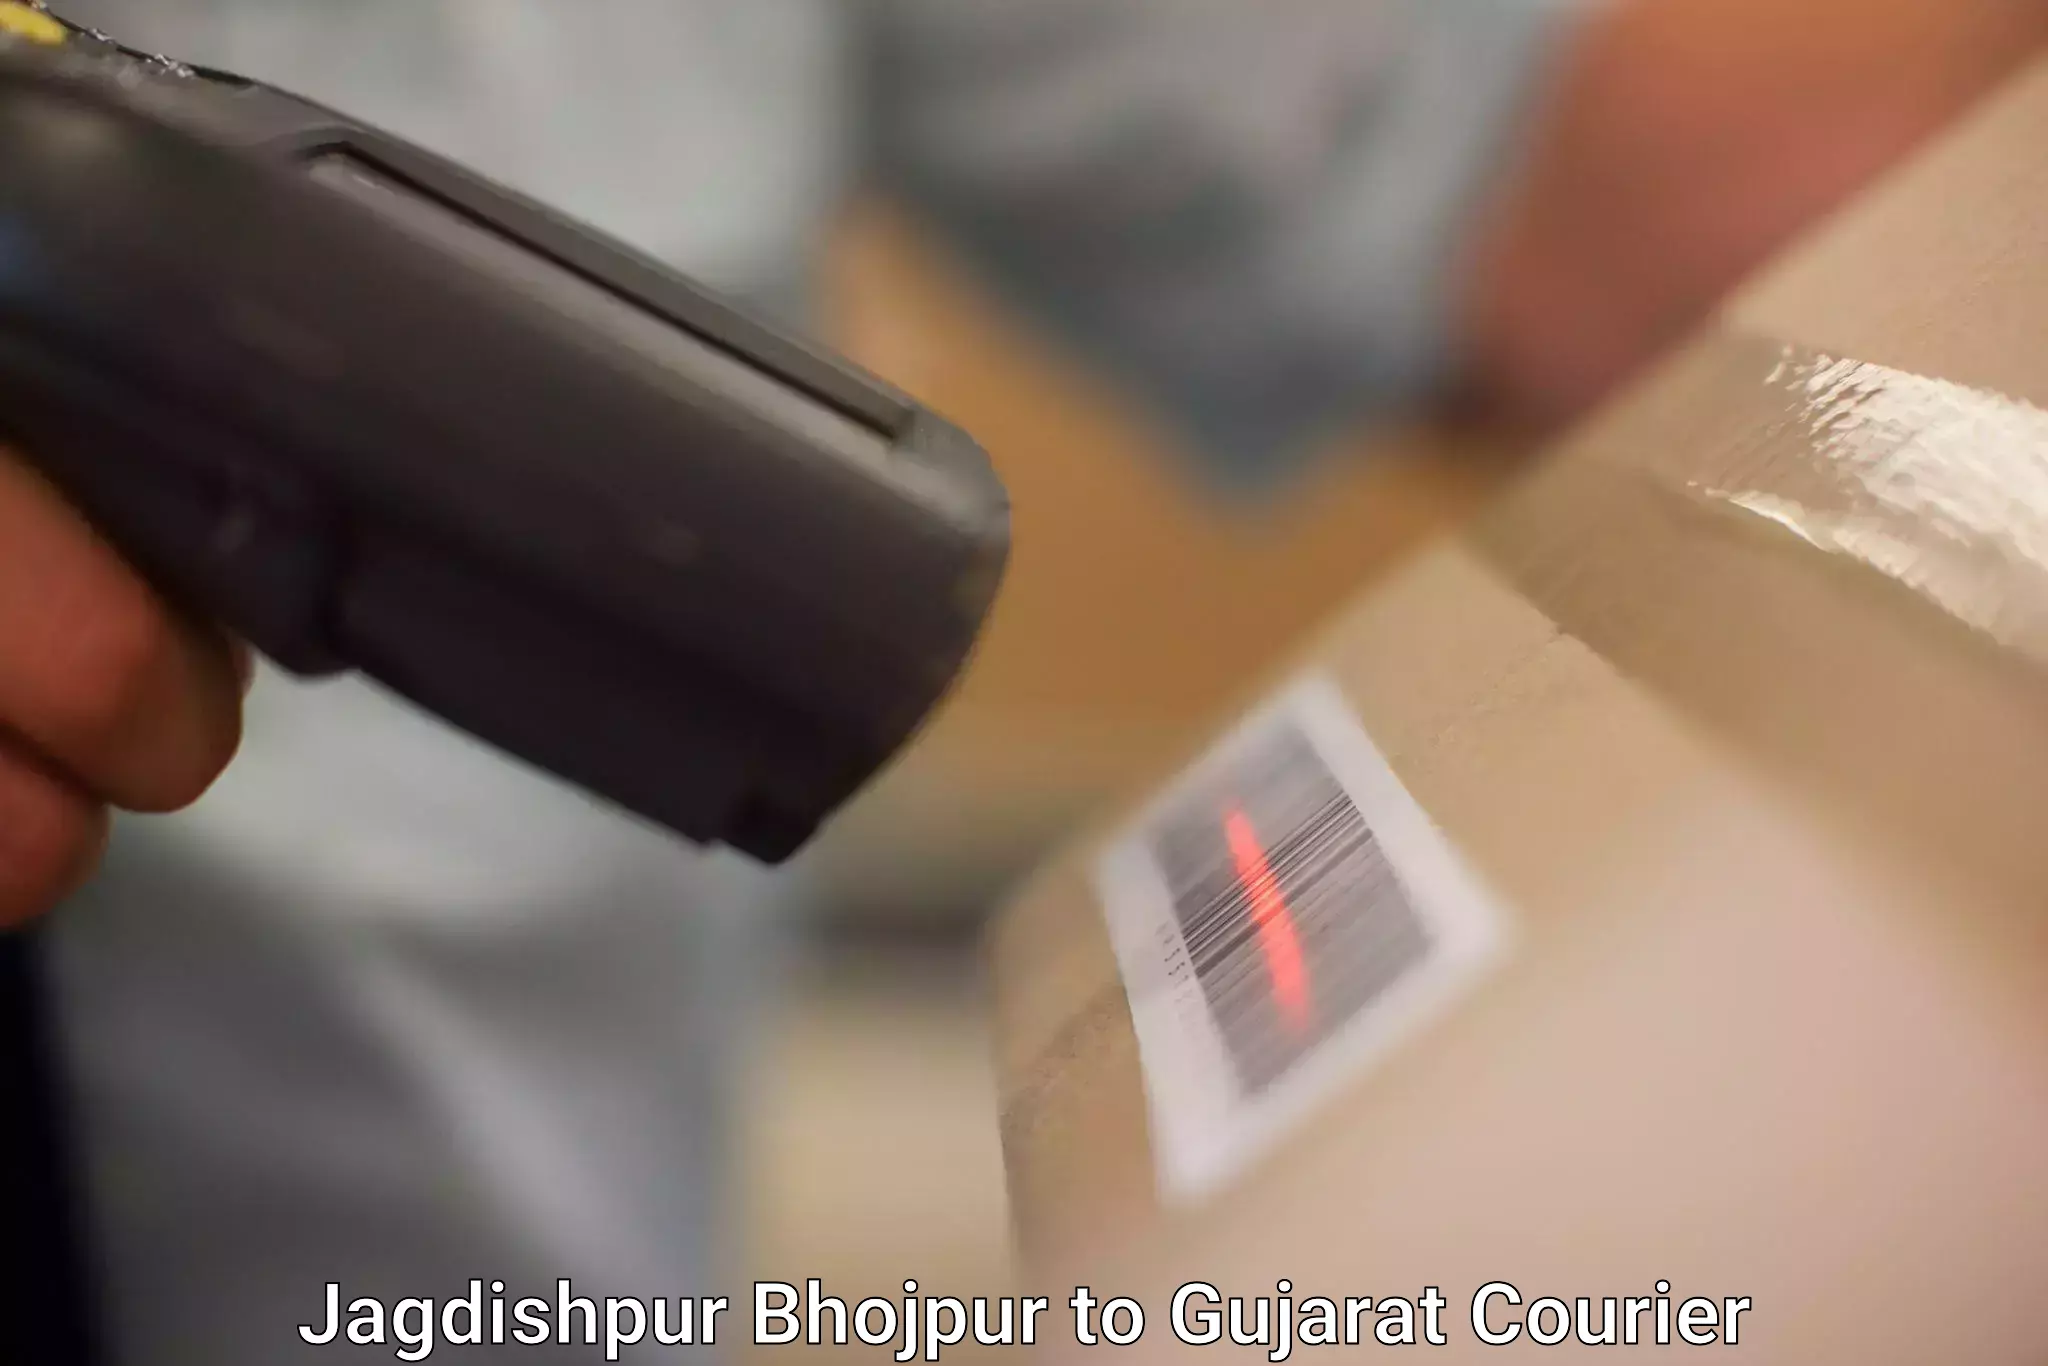 Premium courier solutions Jagdishpur Bhojpur to Ahmedabad